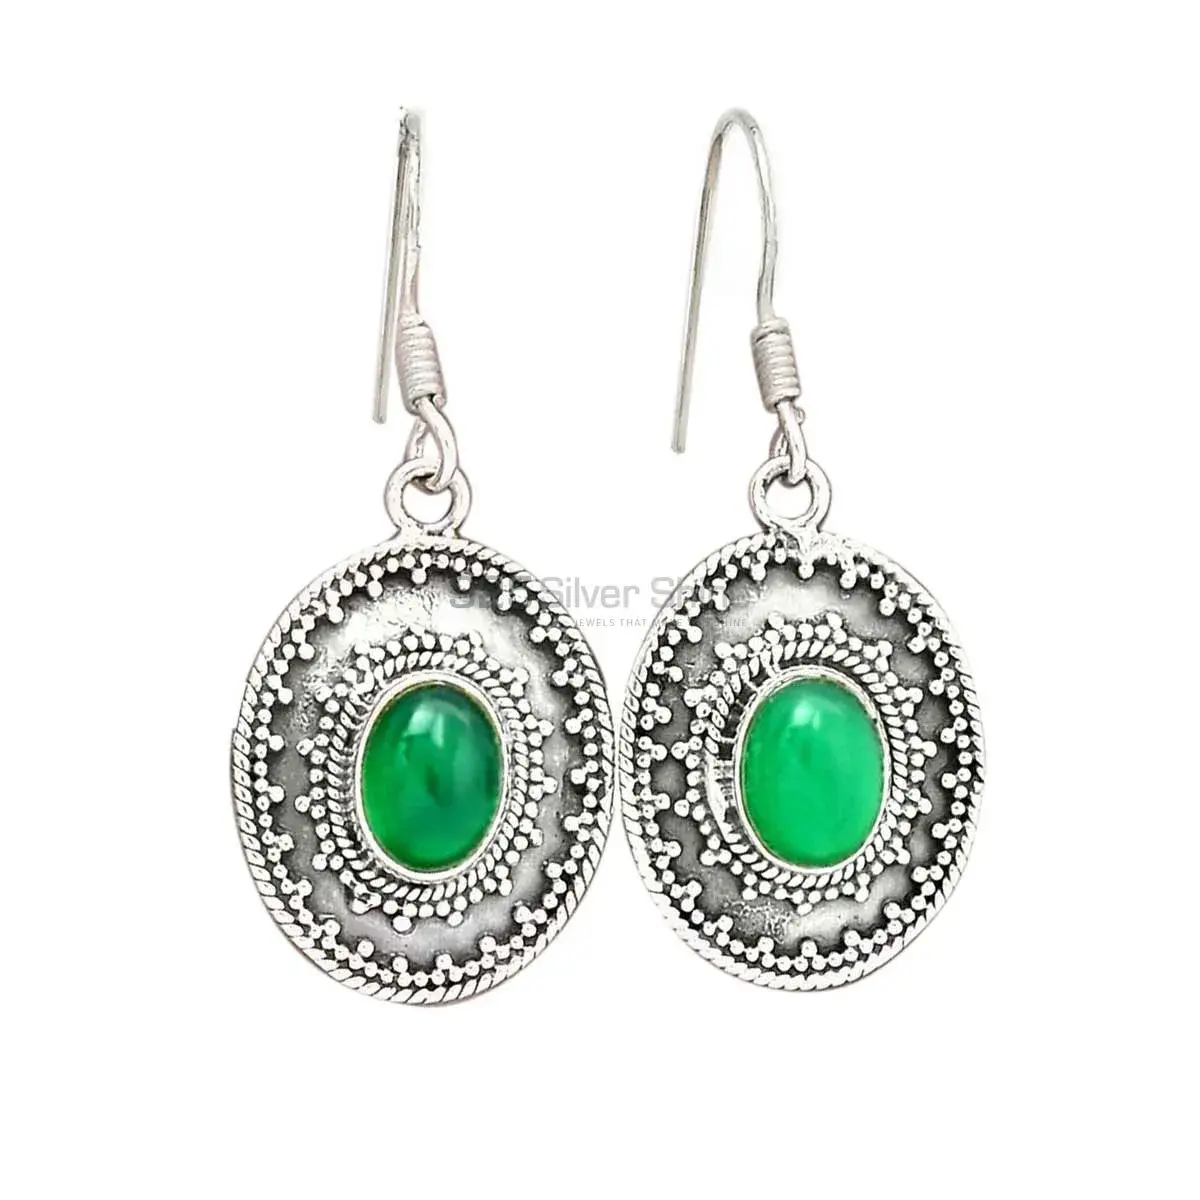 High Quality 925 Sterling Silver Handmade Earrings In Green Onyx Gemstone Jewelry 925SE2221